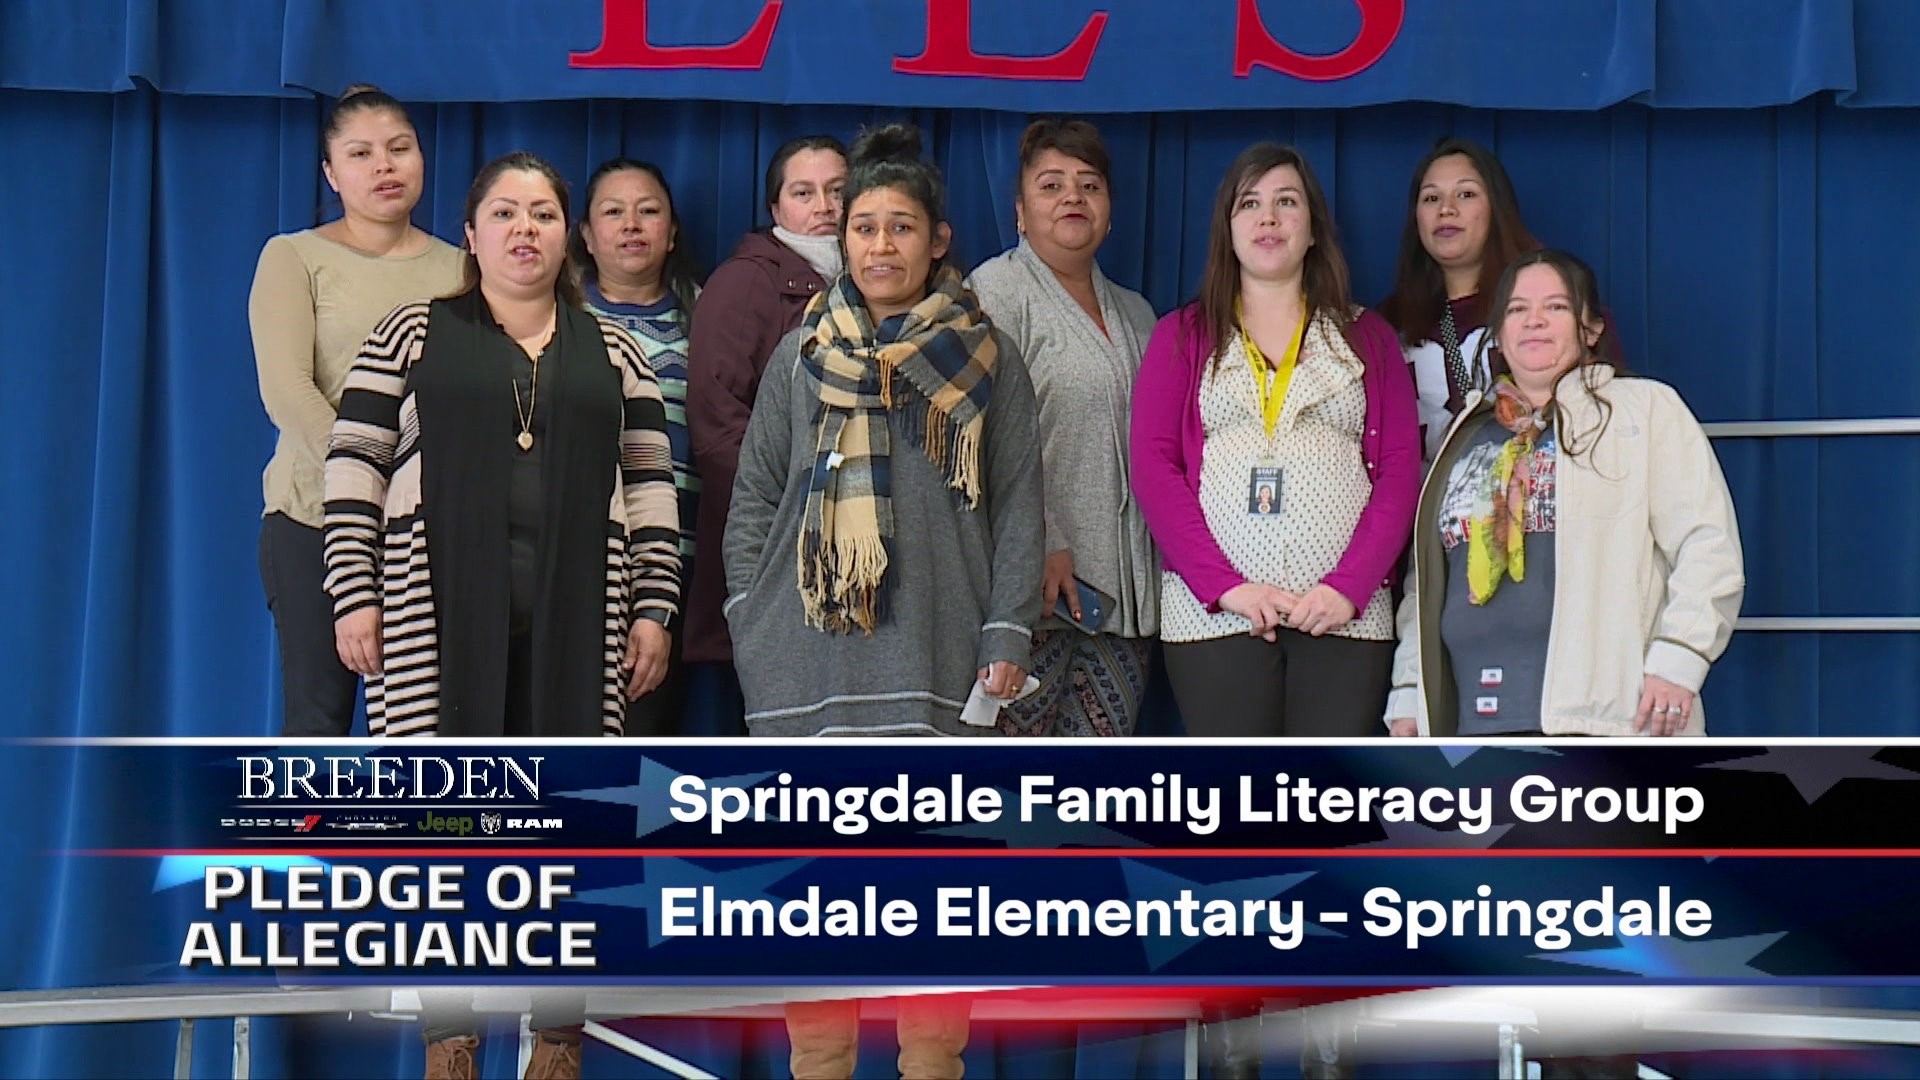 Springdale Family Literacy Group Elmdale Elementary, Springdale